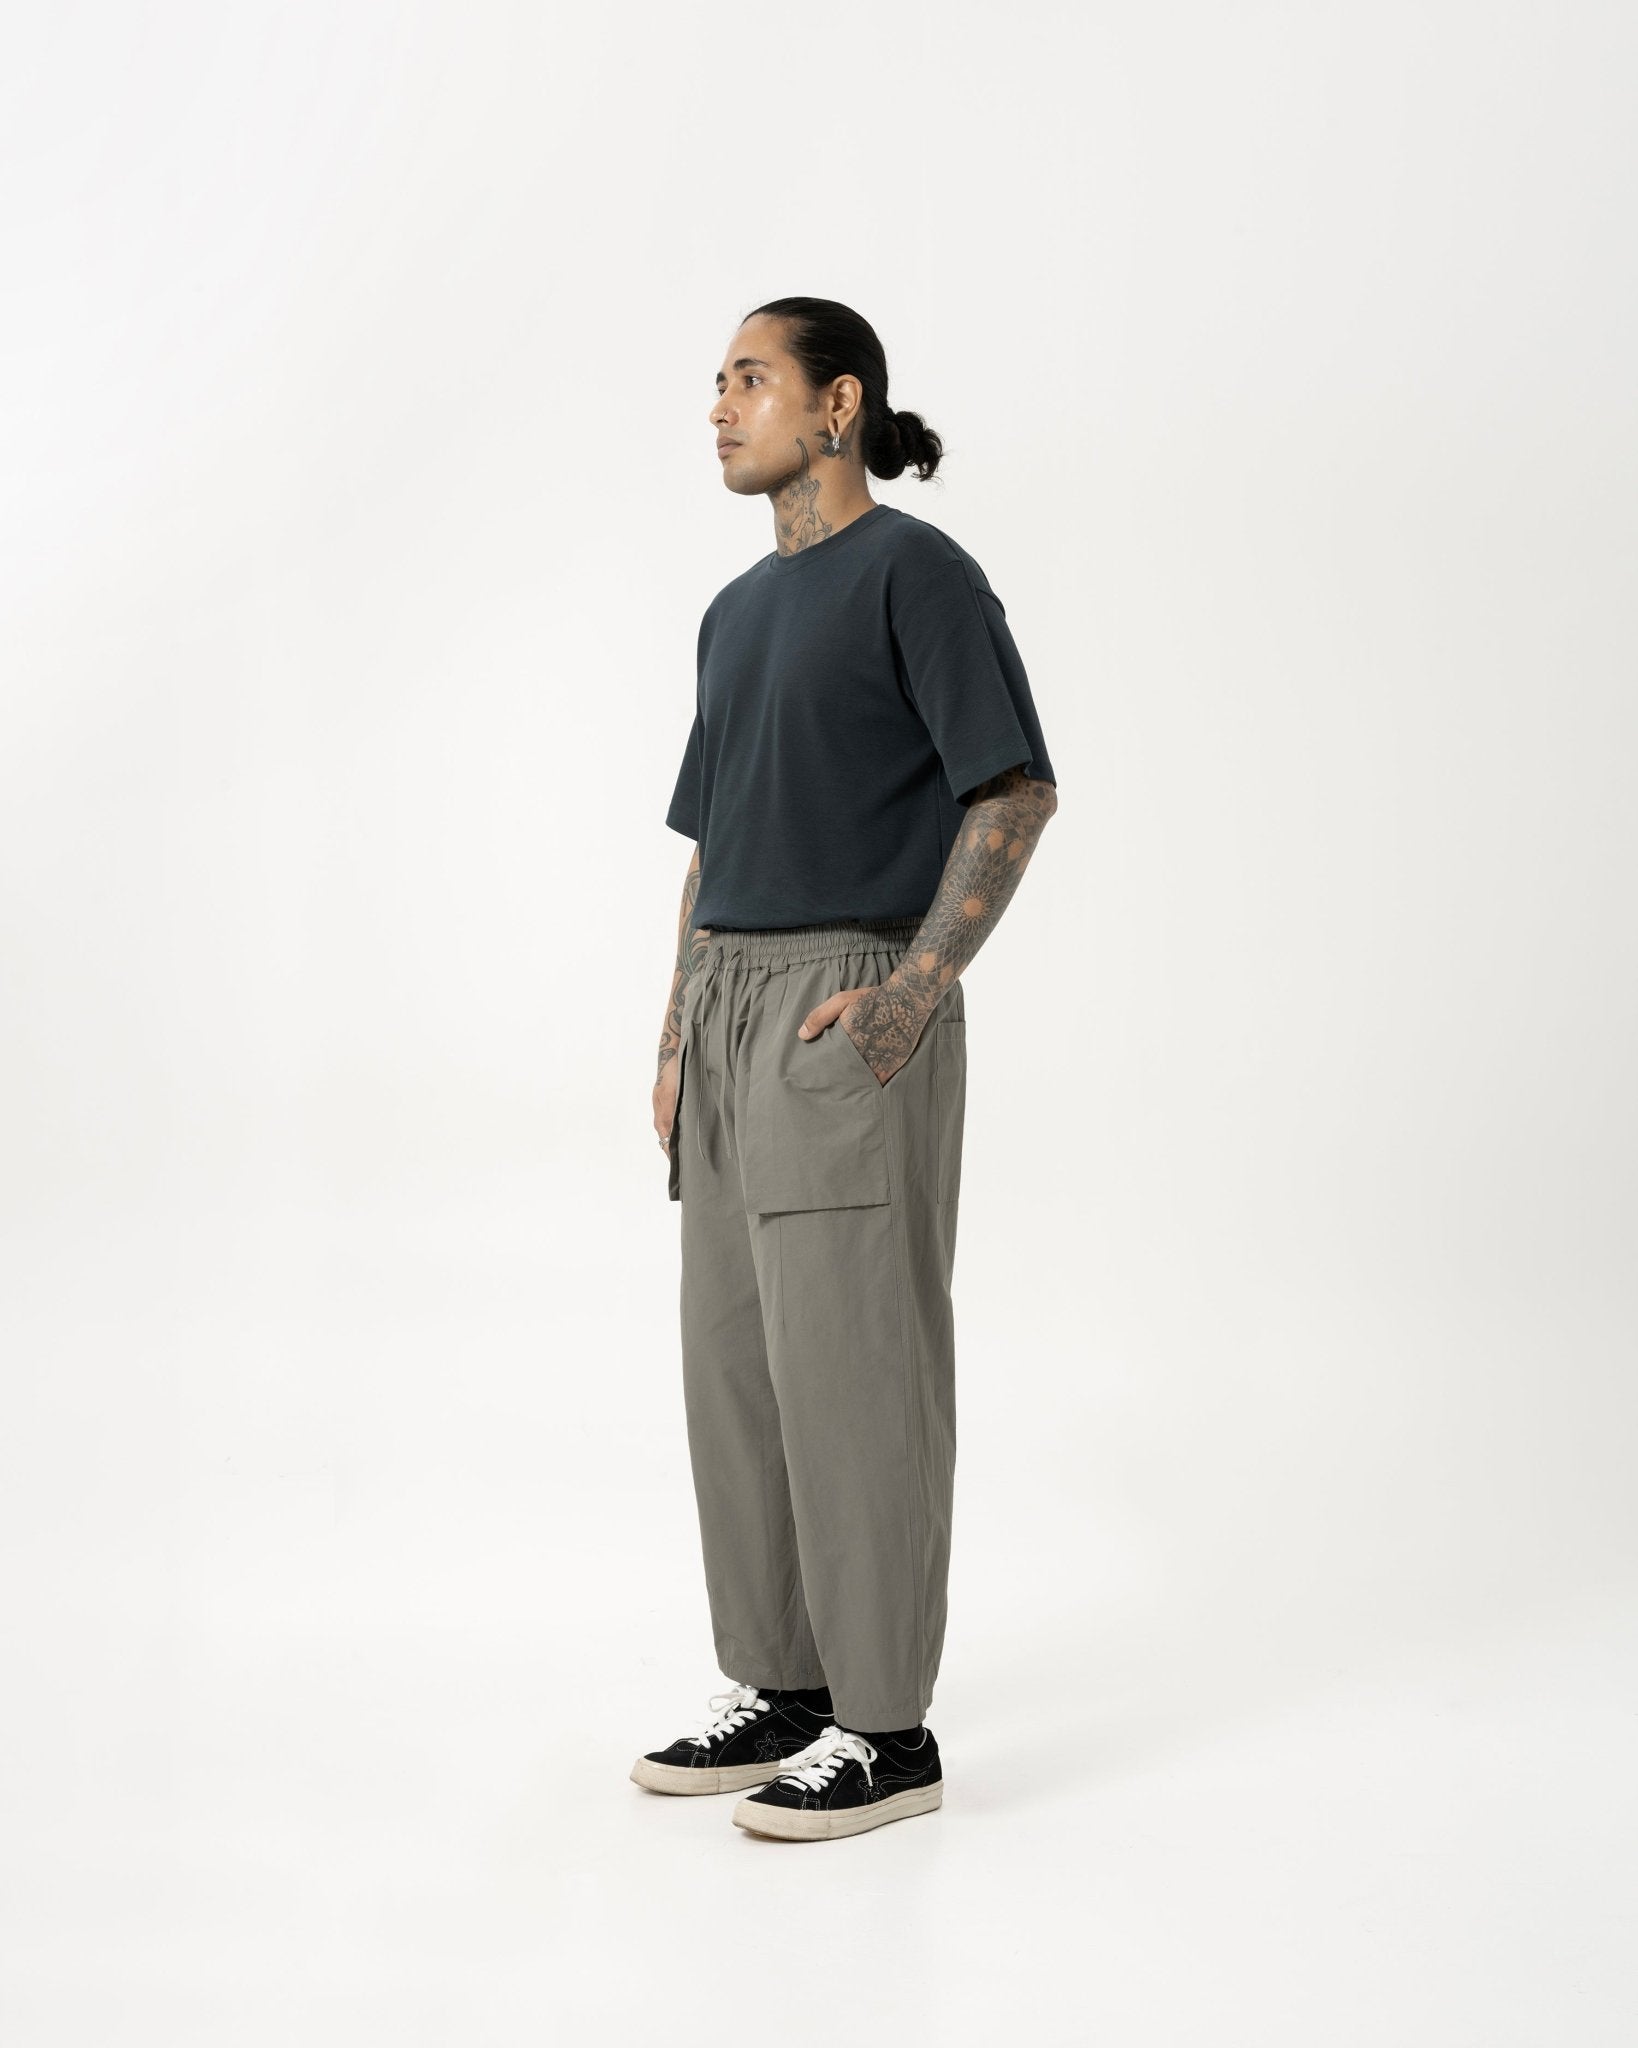 GRAYE Singapore Designer Men's Apparel Brand - Relaxed Elasticated Trousers - Pebble Gray